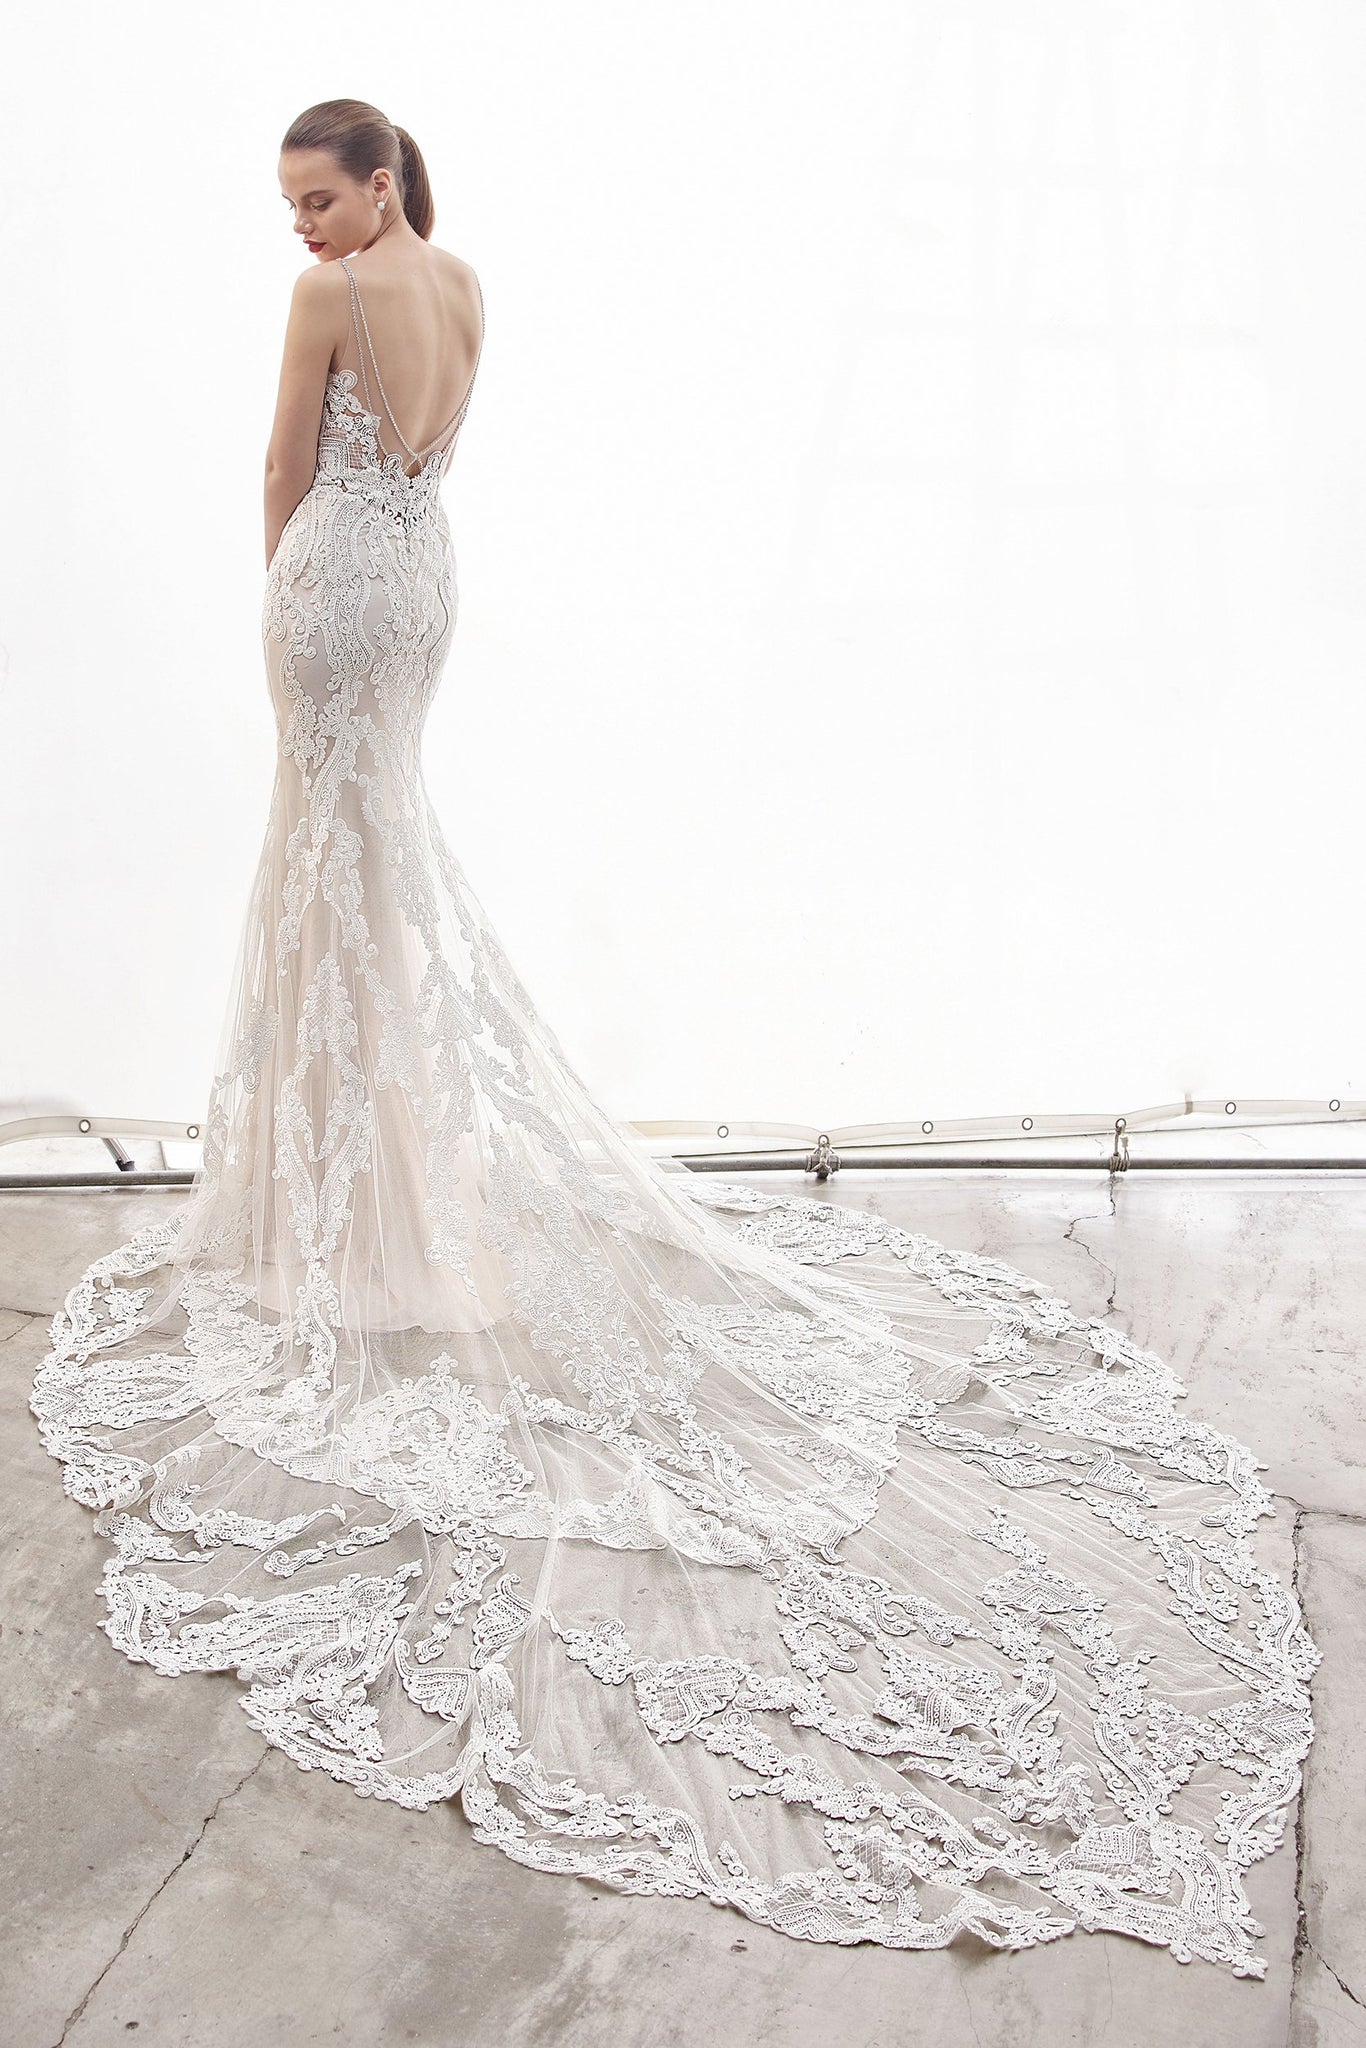 Nanette - Sample Gown, Online Sample Sale, Enzoani - Sample Gown - Eternal Bridal